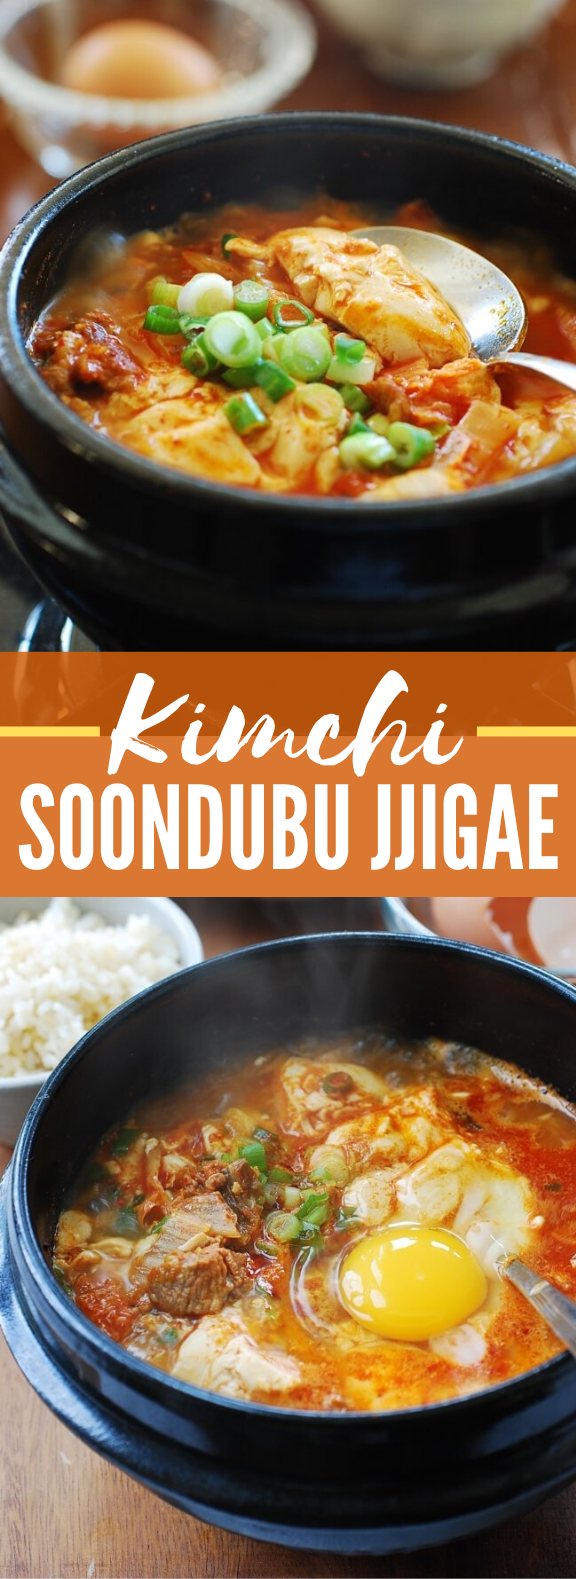 Kimchi Soondubu Jjigae (Soft Tofu Stew) #dinner #soup